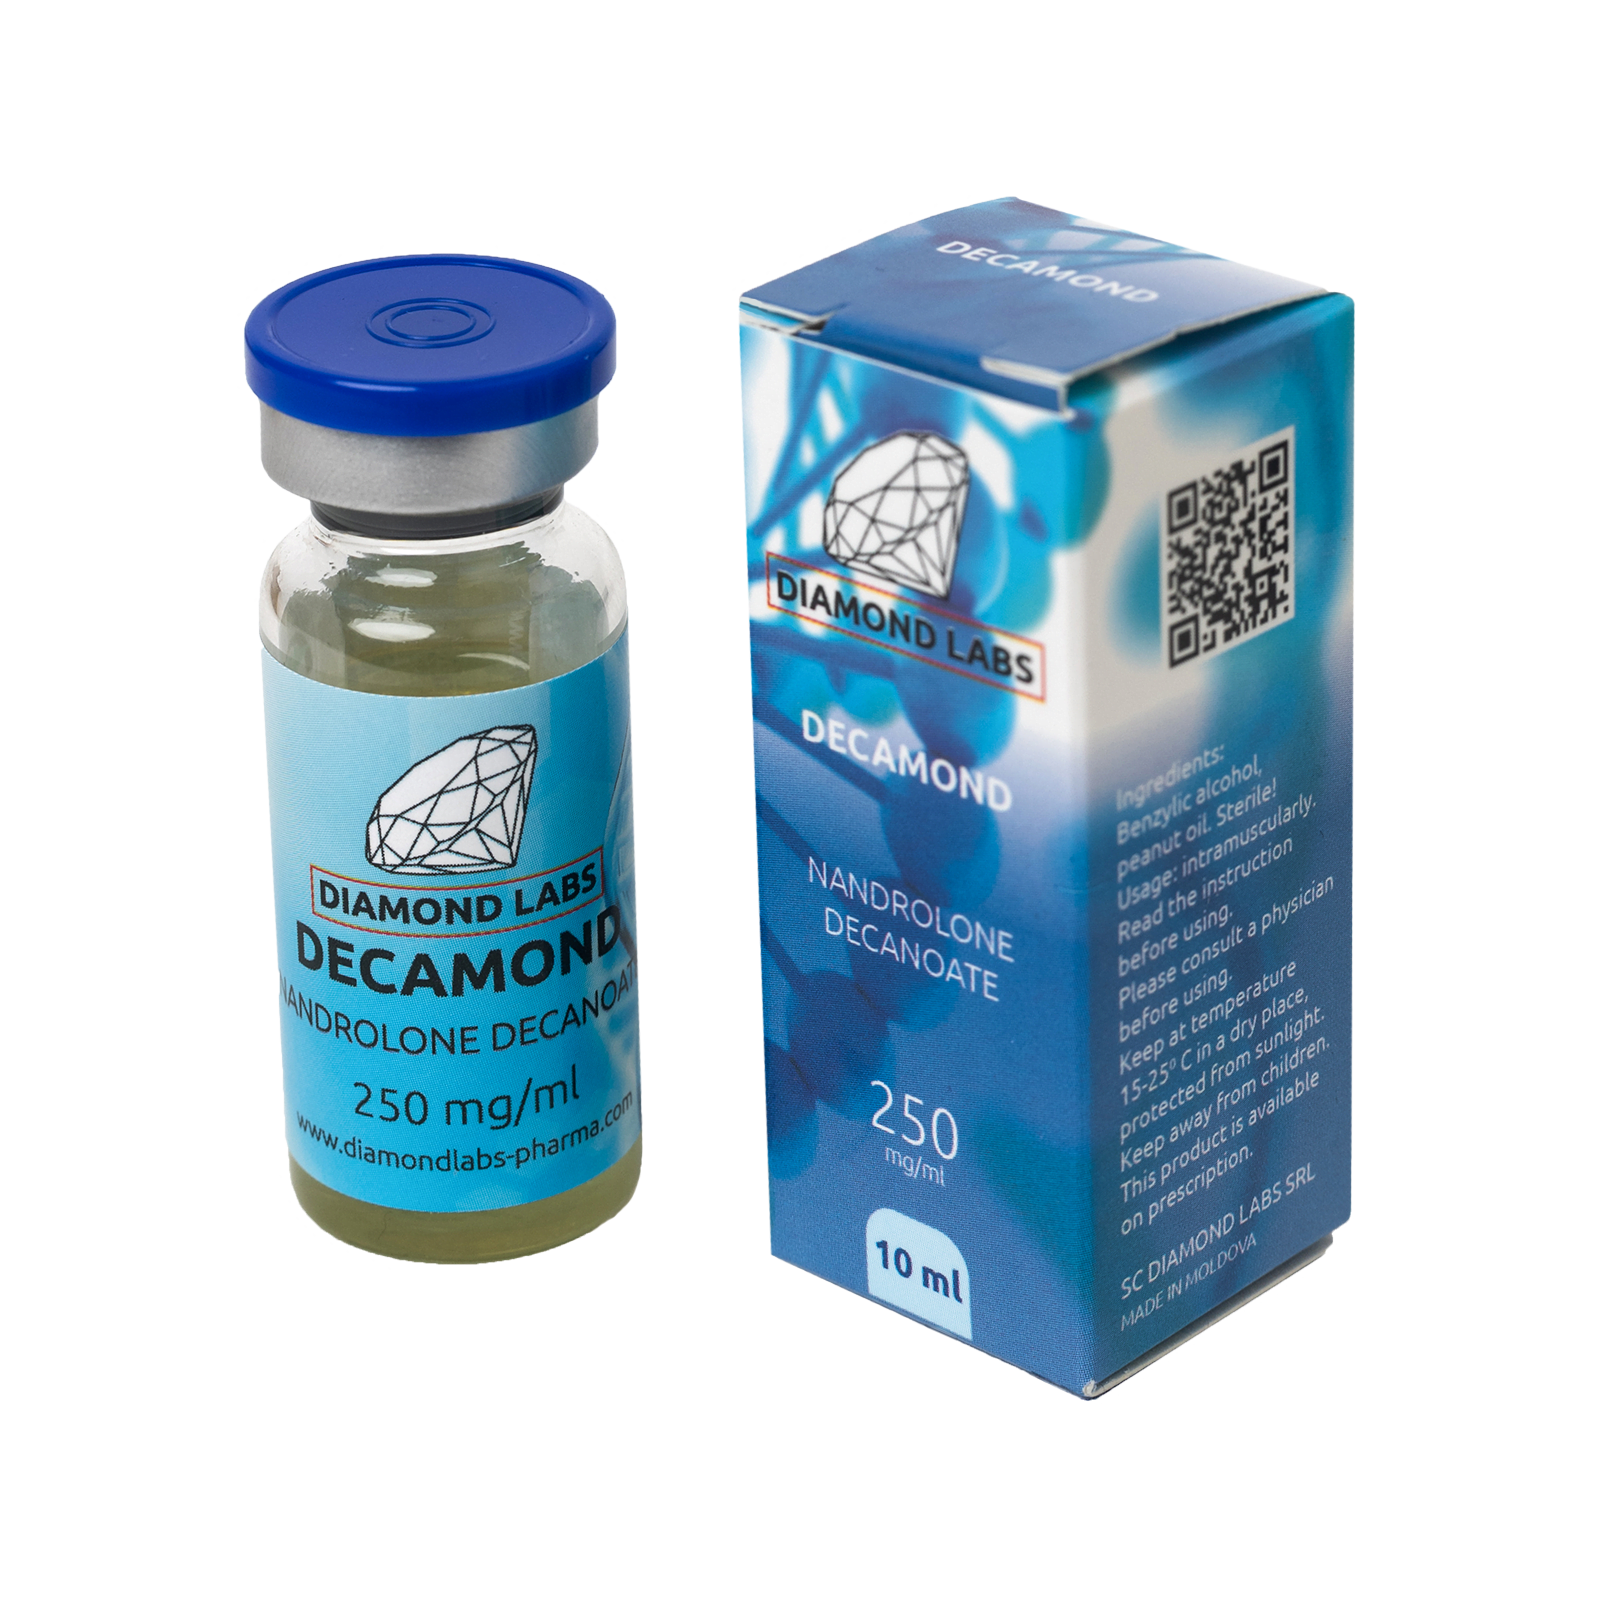 DECAMOND nandrolone decanoate